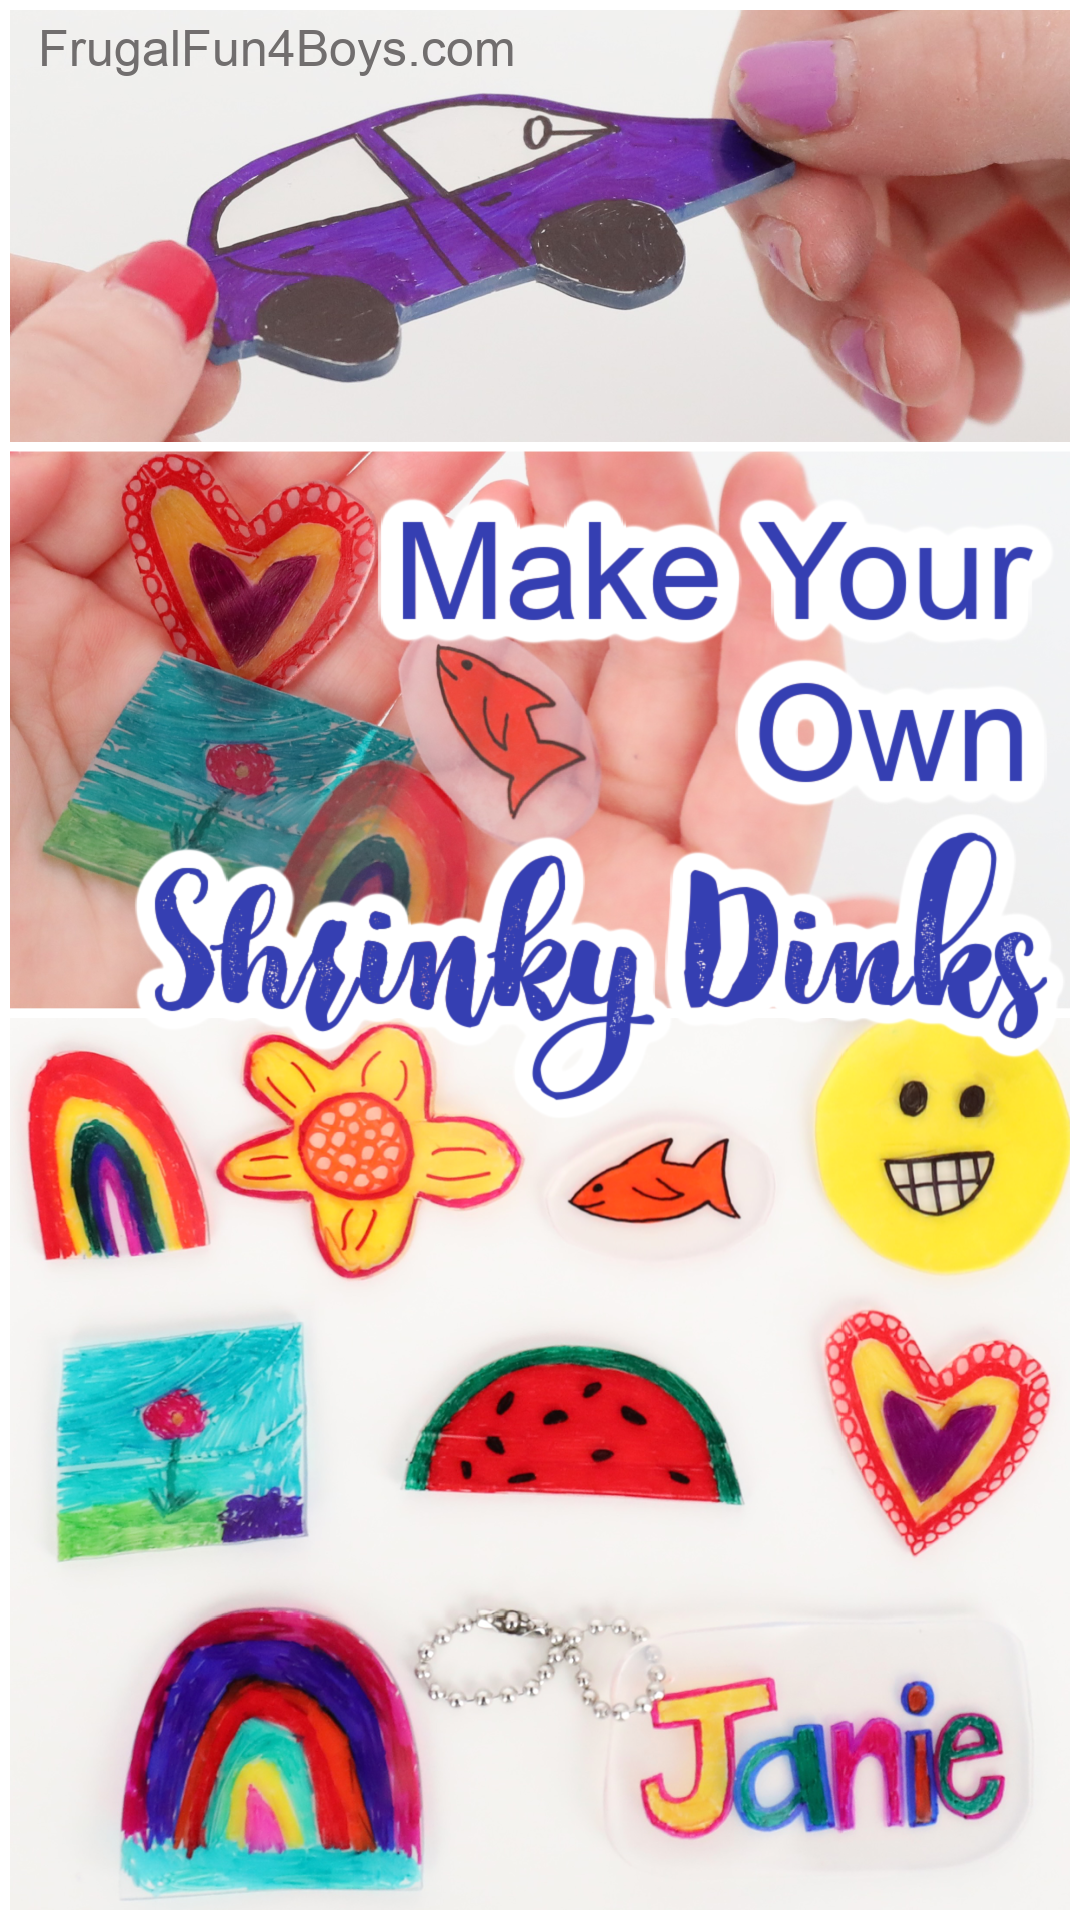 DIY Shrinky Dinks: Which Plastic Works Best? - Jennifer Maker